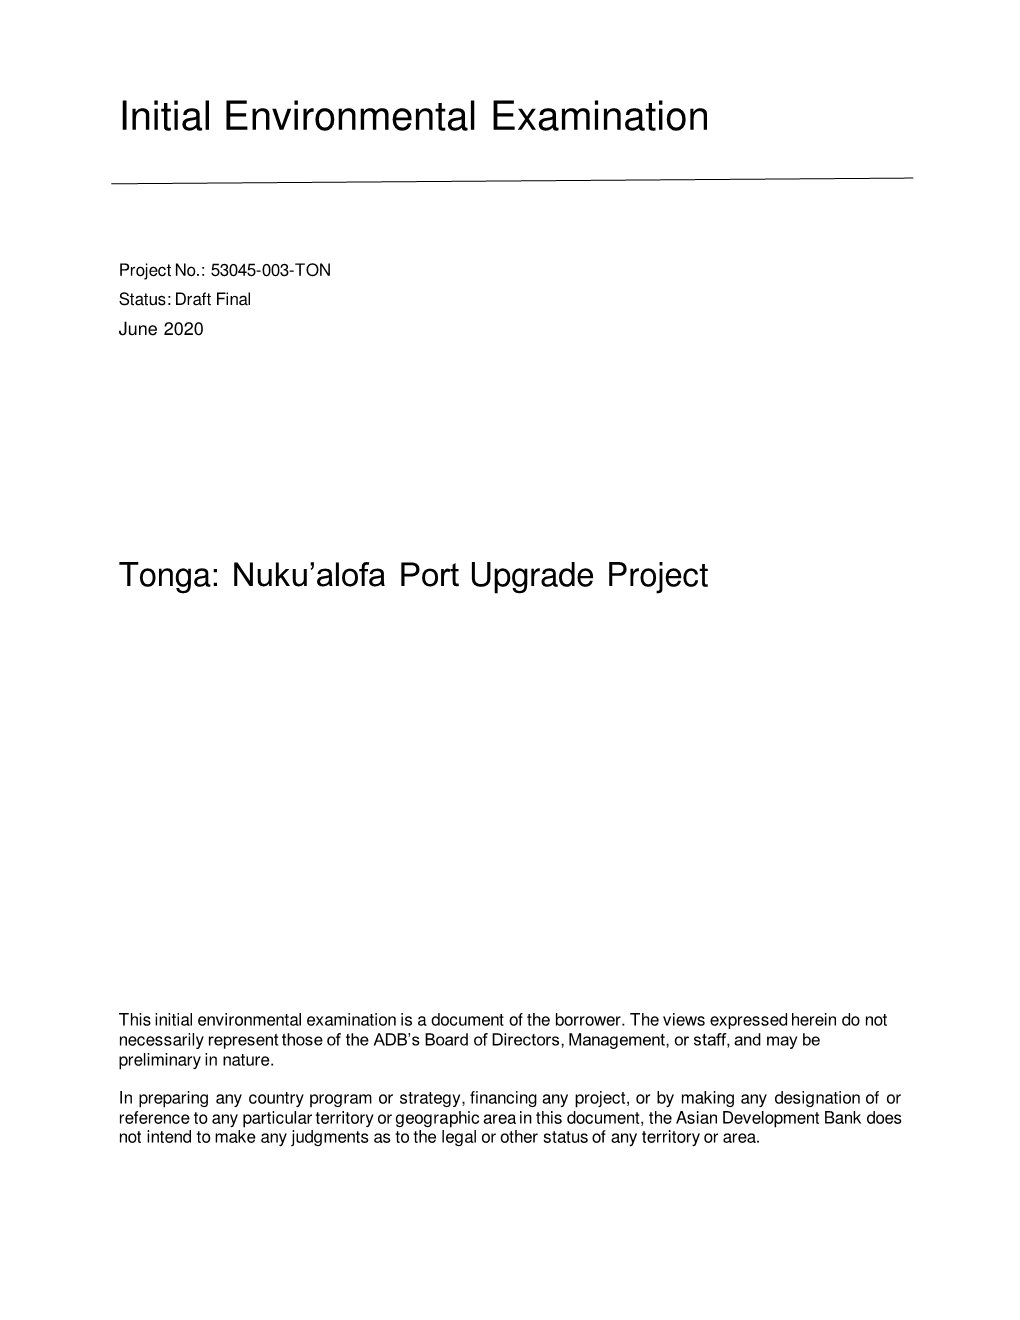 53045-003: Nuku'alofa Port Upgrade Project